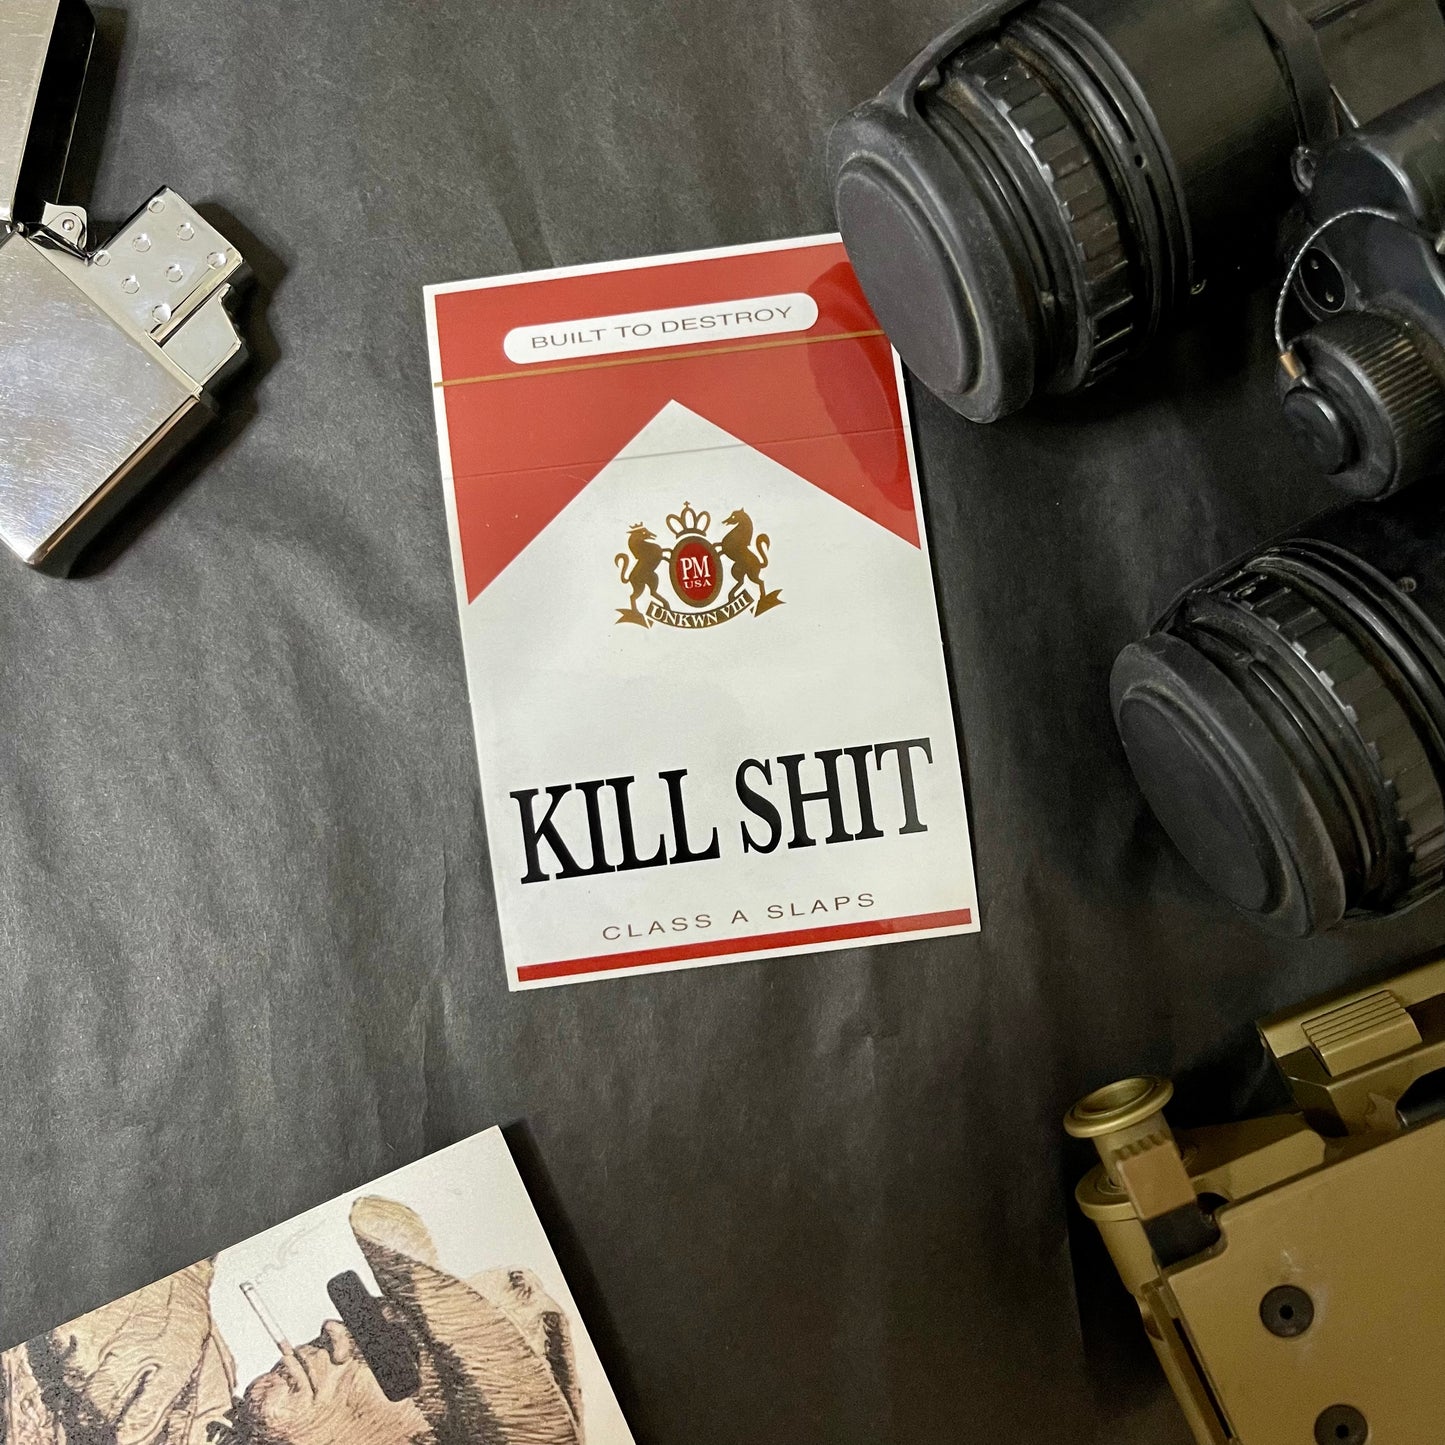 Kill Shit “Smoke em if you got em" Sticker